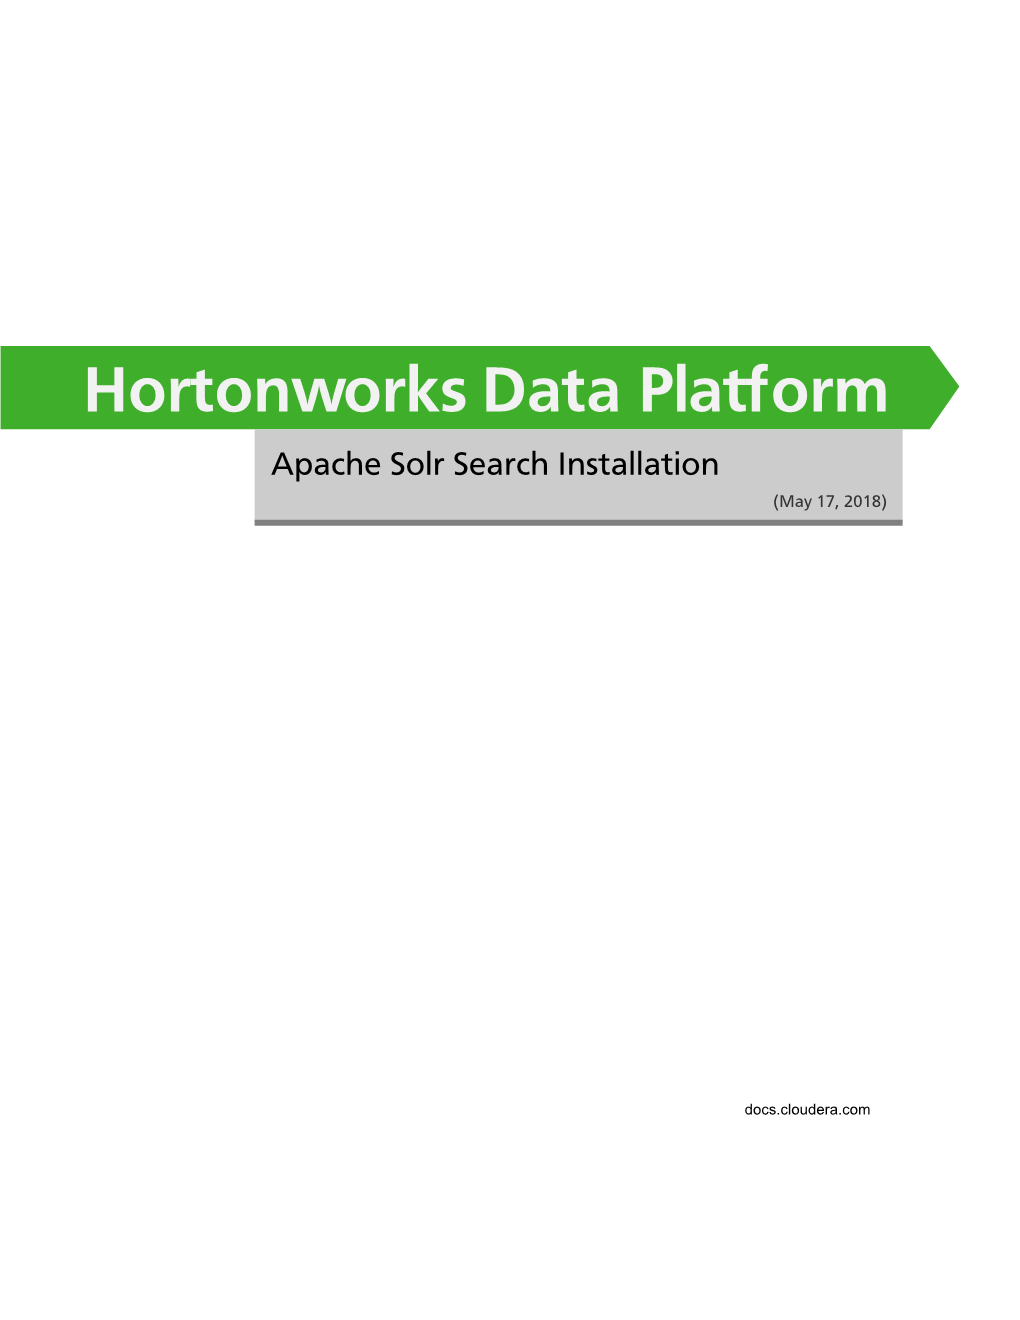 Hortonworks Data Platform Apache Solr Search Installation (May 17, 2018)